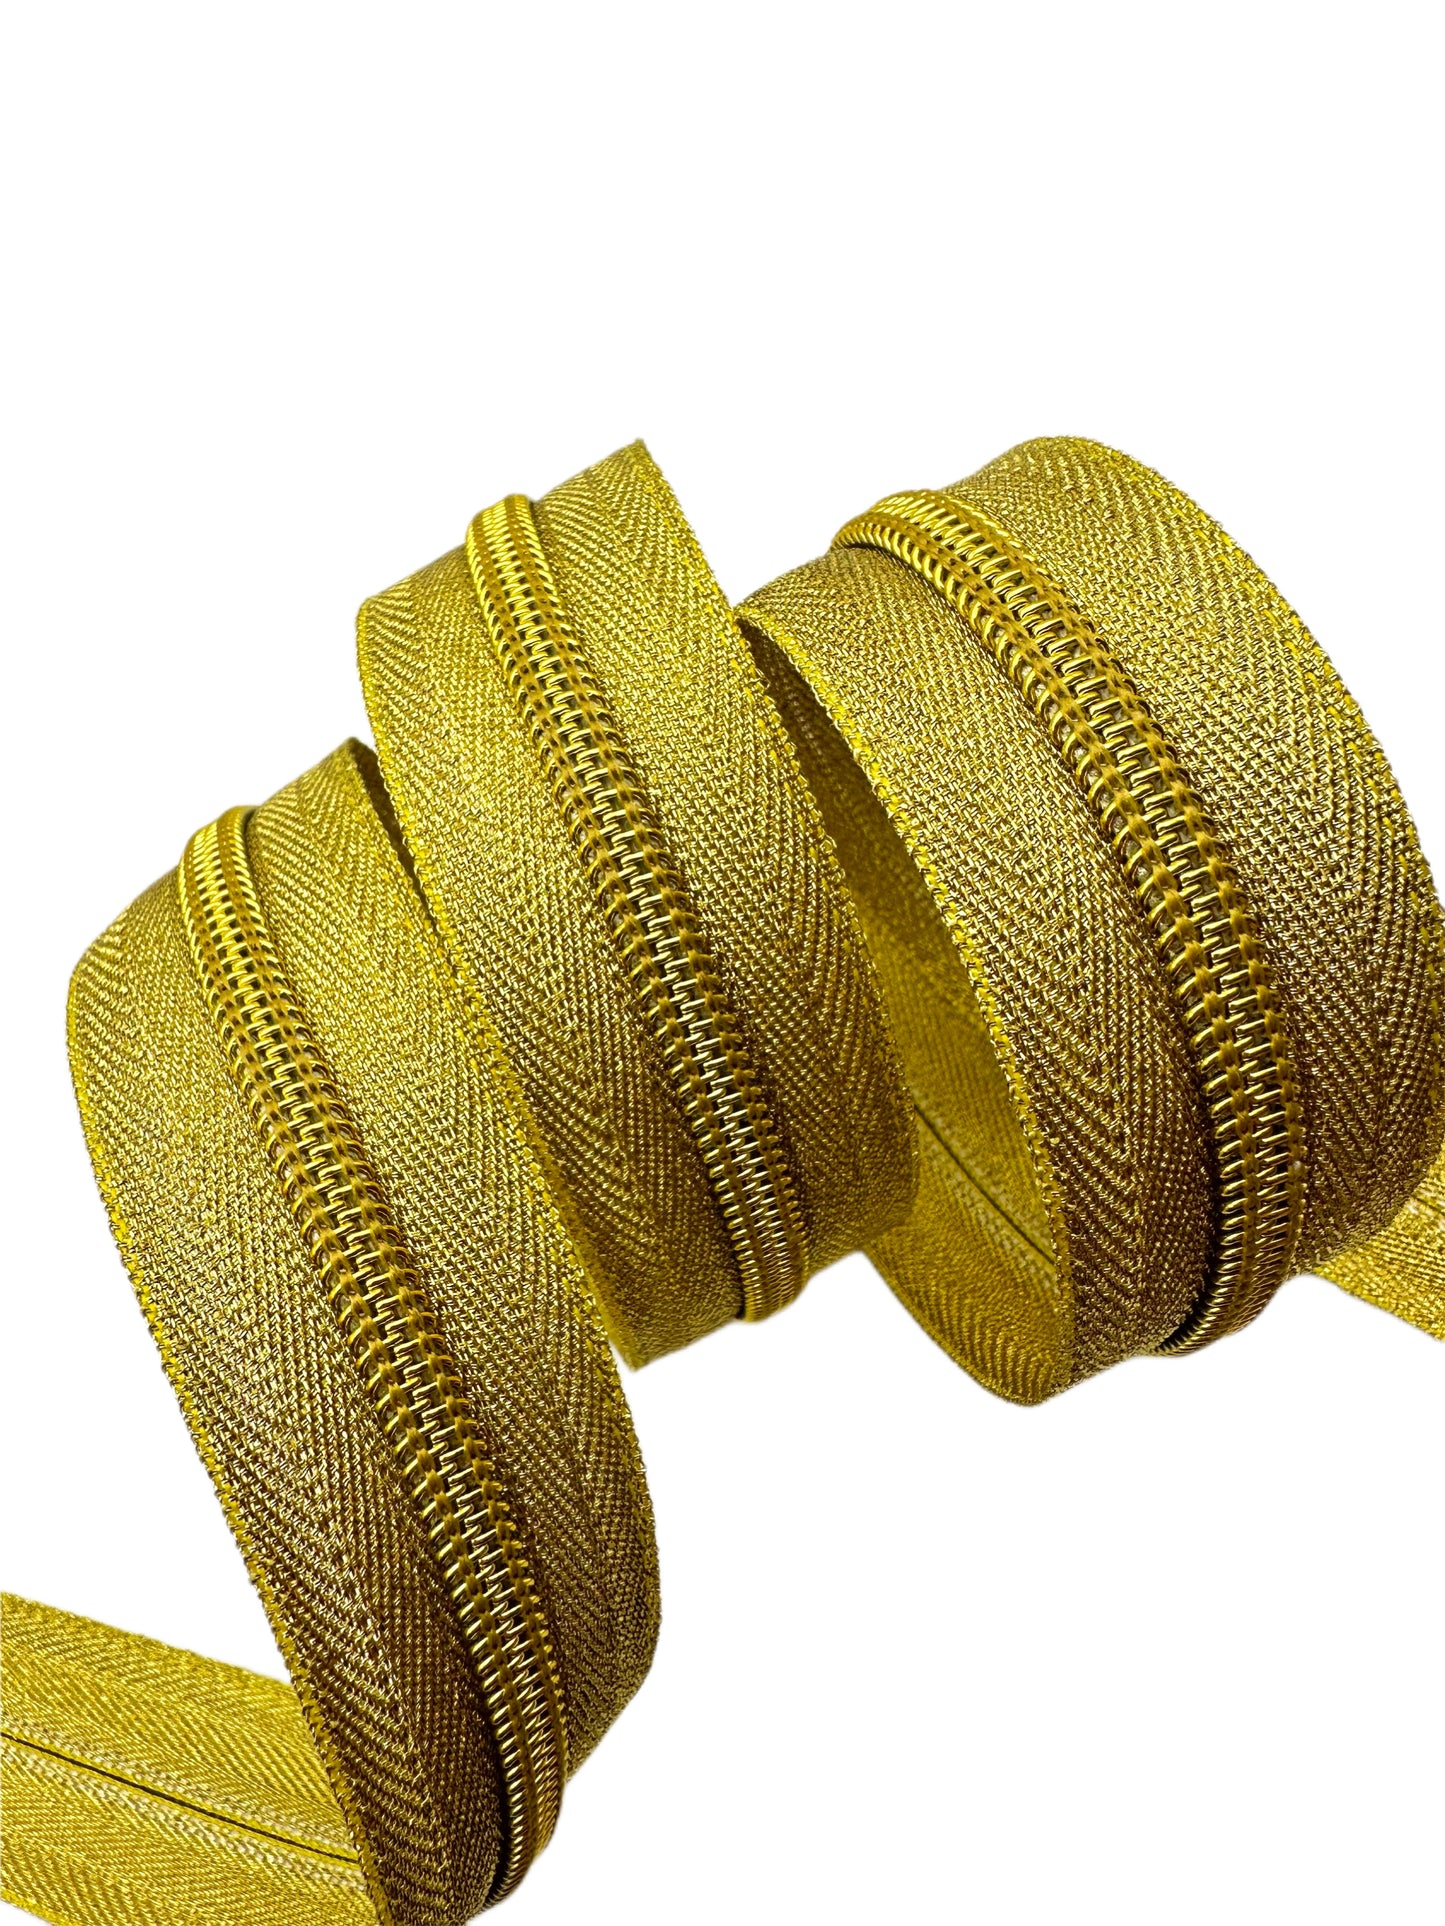 Gold Metallic Tape with Gold teeth Zipper Tape